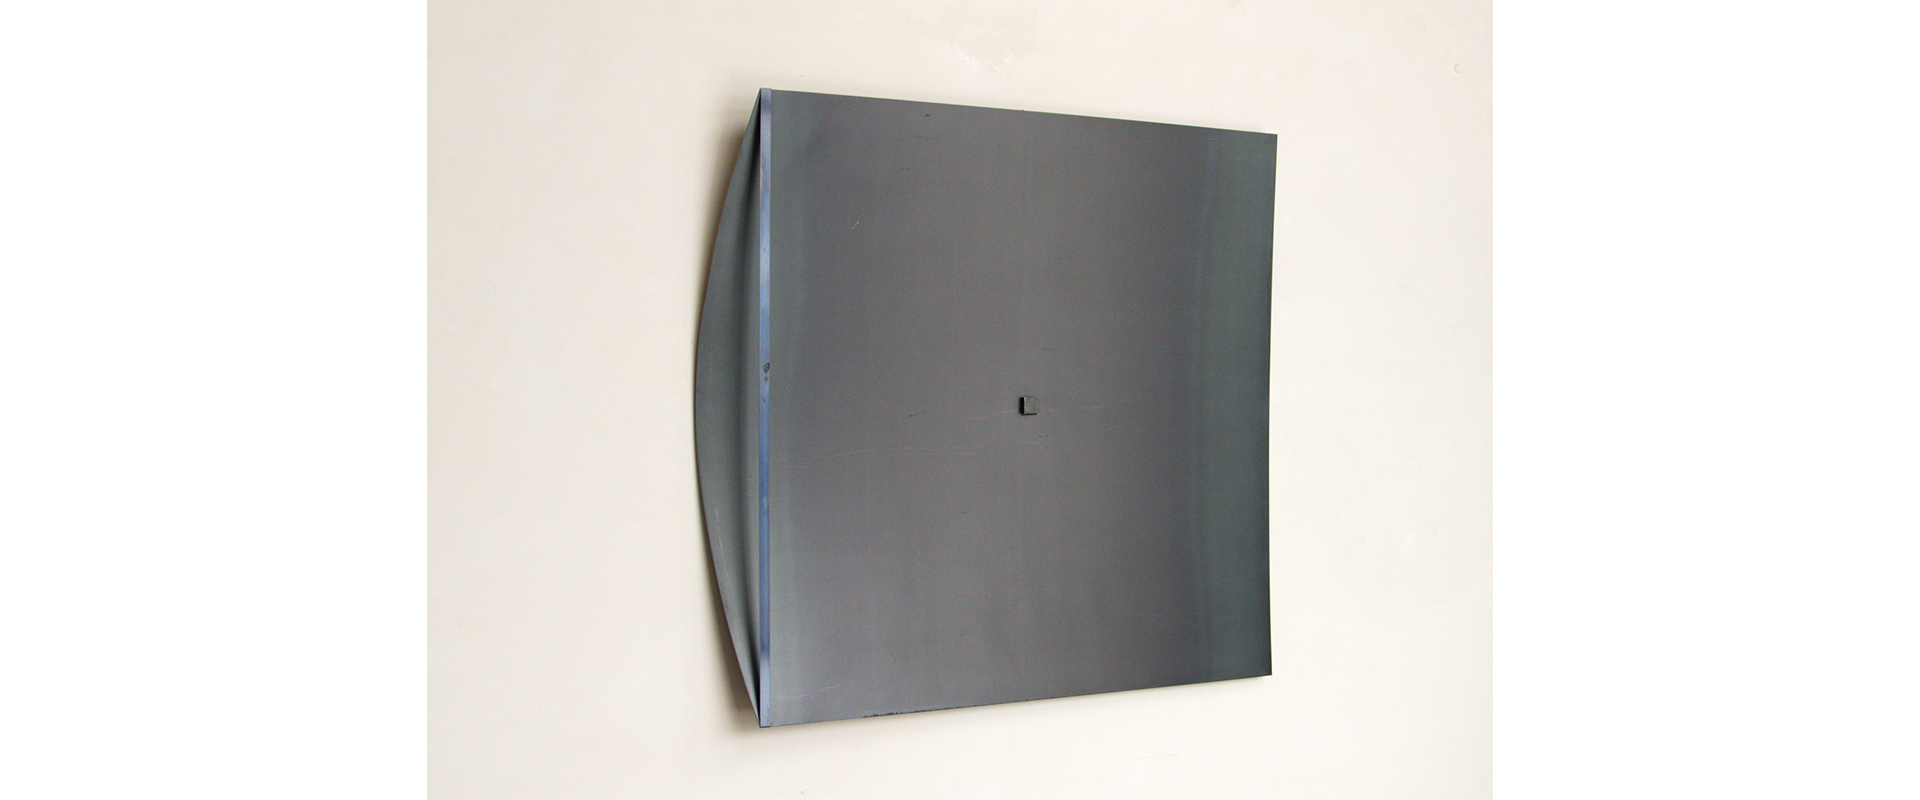 Flächenspannungen, - 1999, Stahlblech, gespannt, 110 x 120 x 8 cm, Gewicht ca. 30 kg